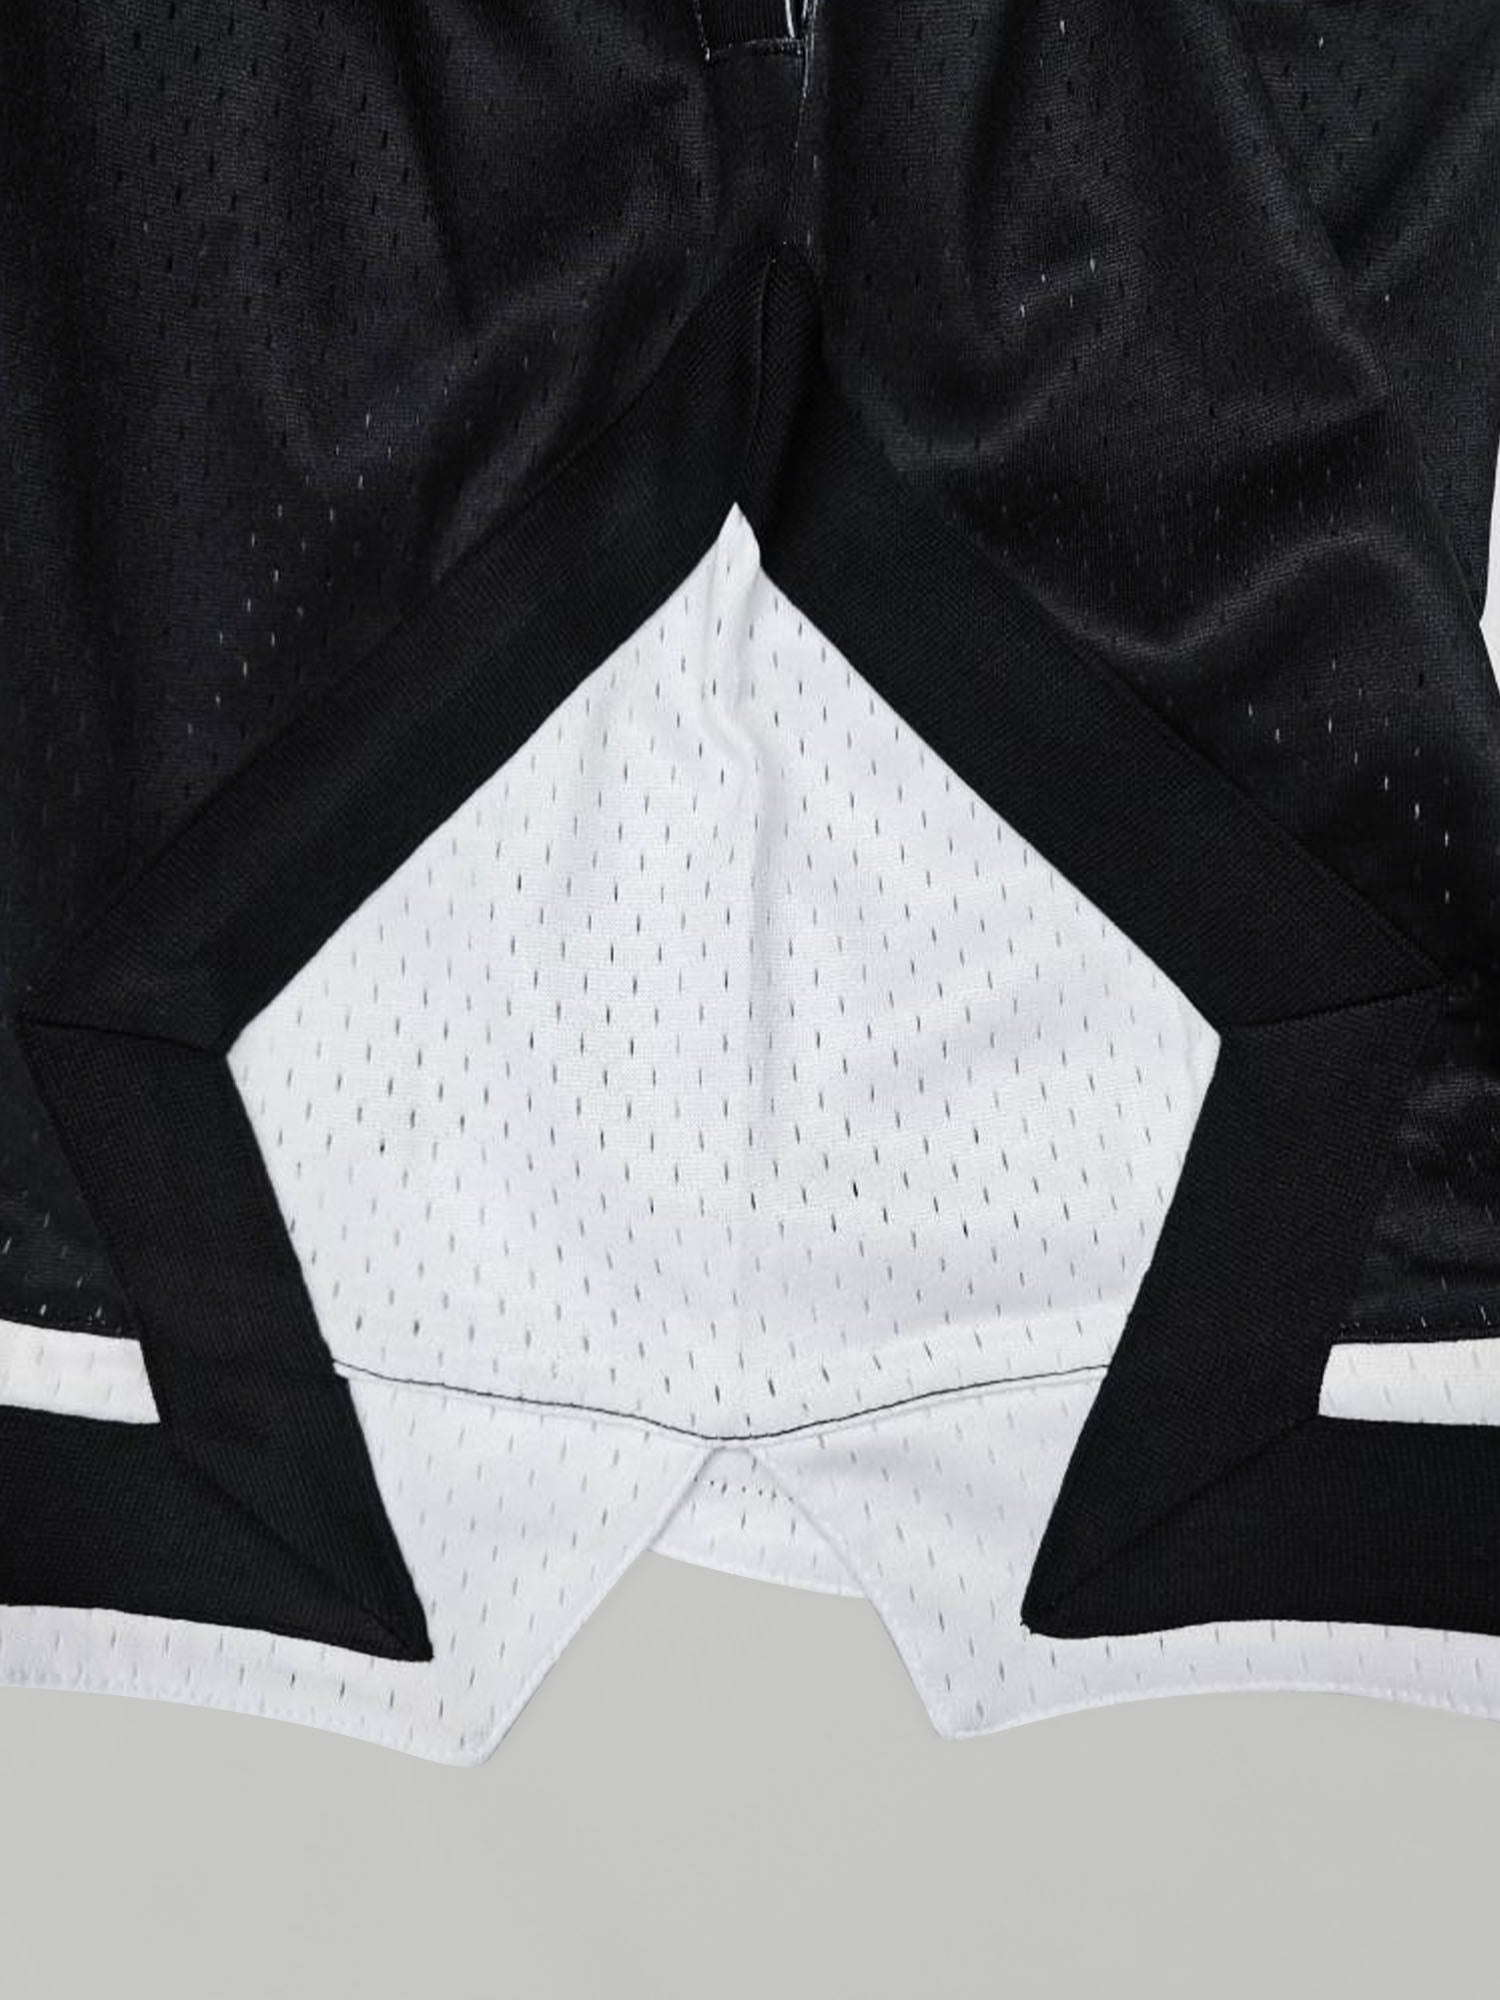 [pre-order] A123 Shorts